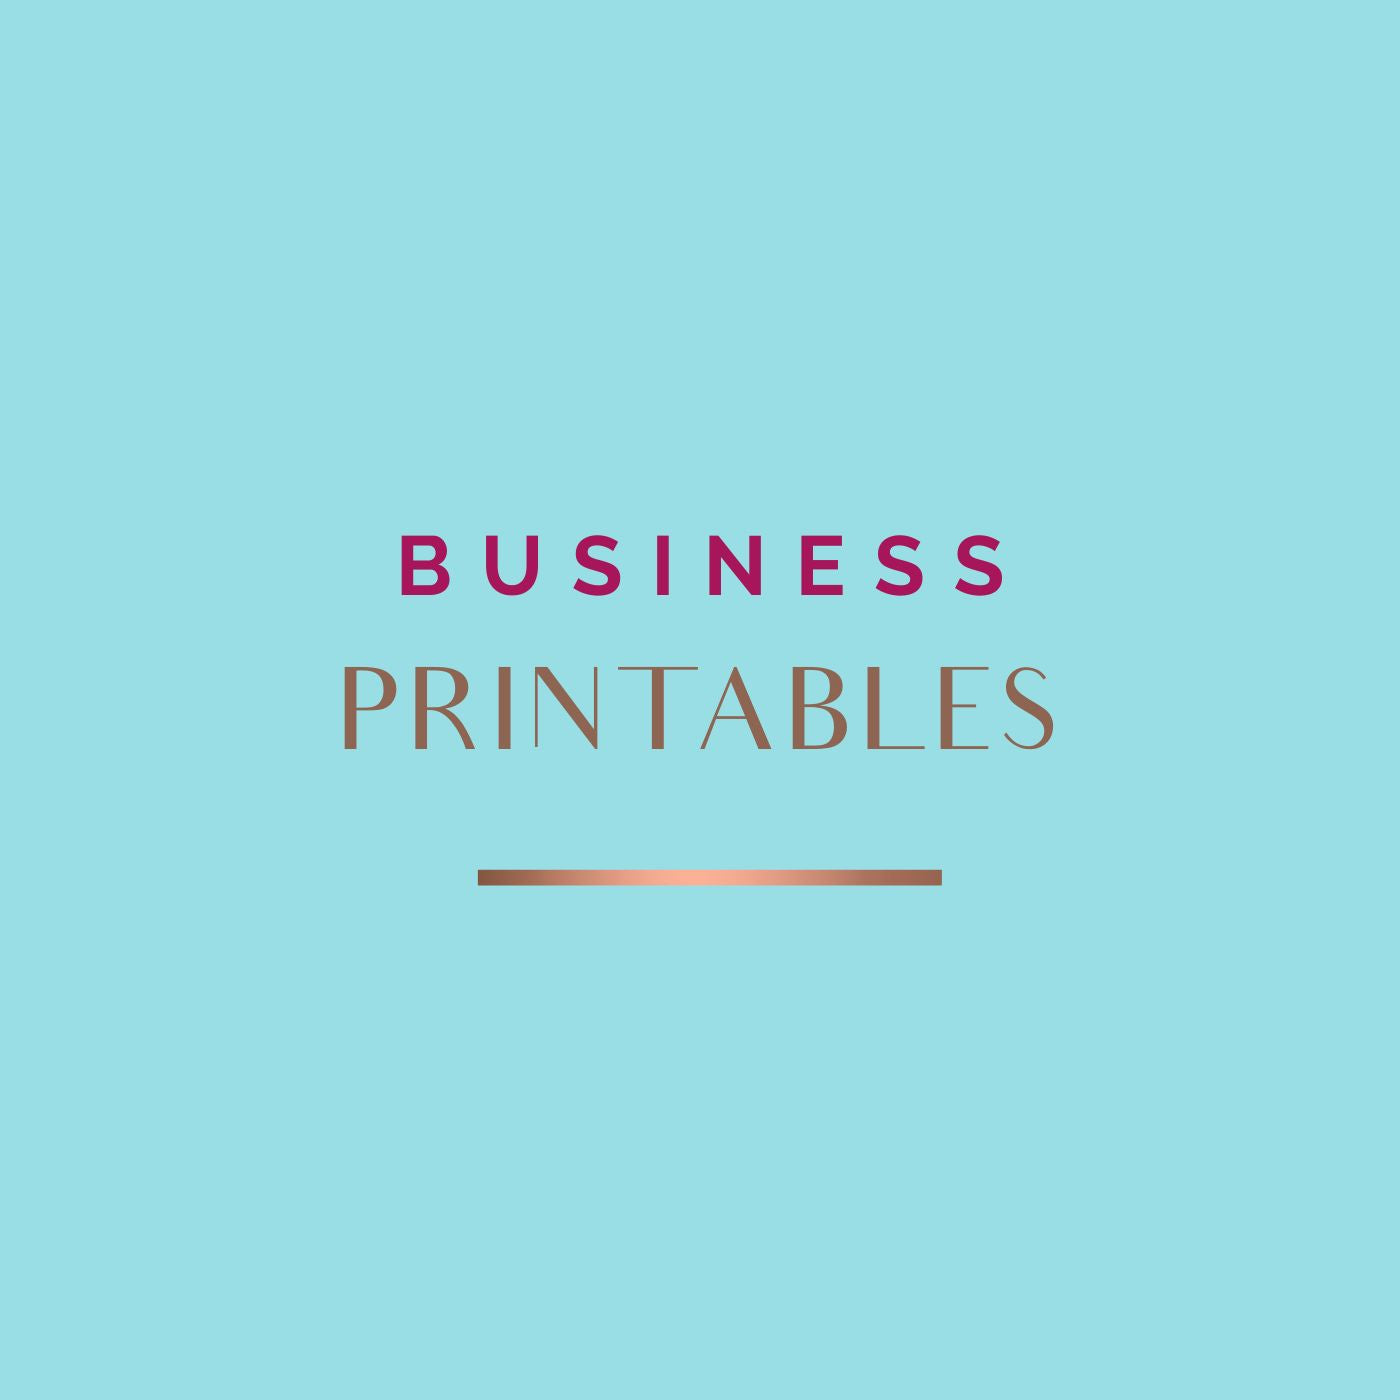 Business Printables